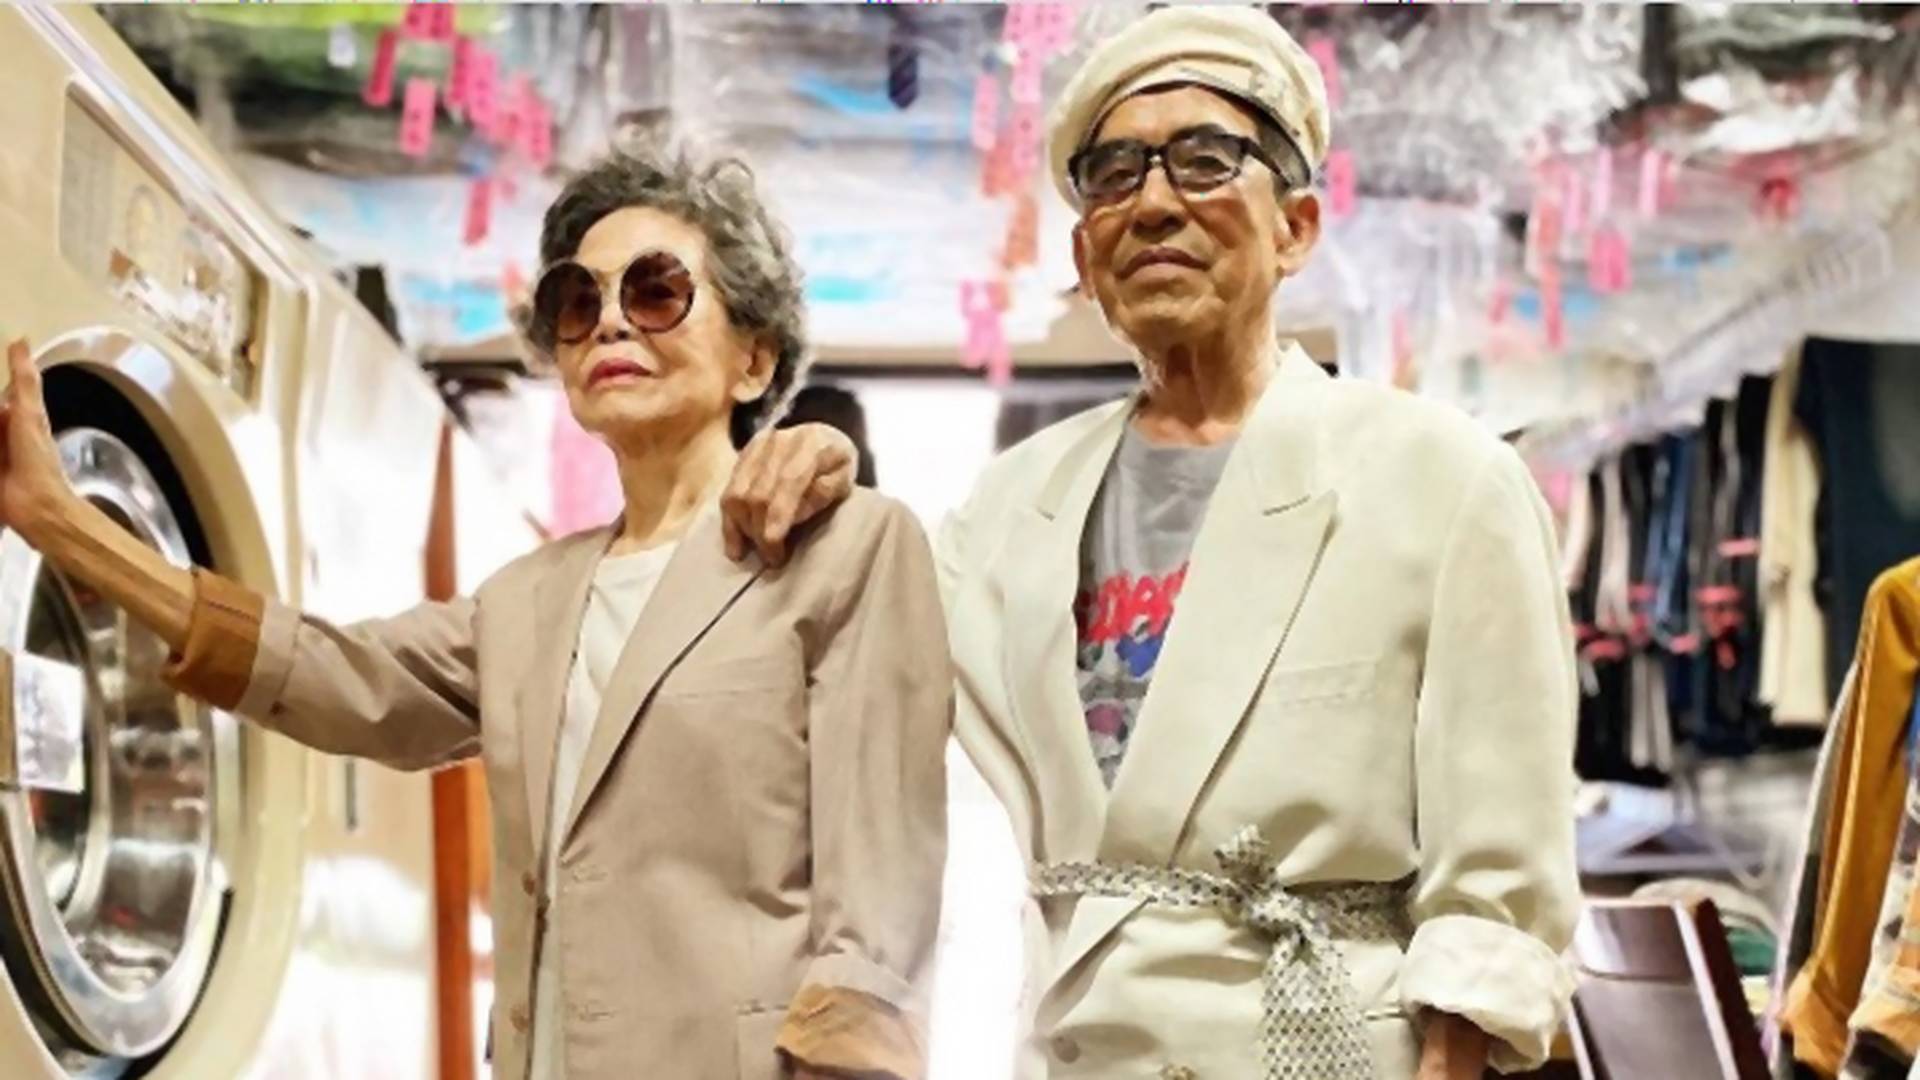 Ovaj par se oblači bolje nego polovina nas - penzioneri hipsteri postali hit na Instagramu